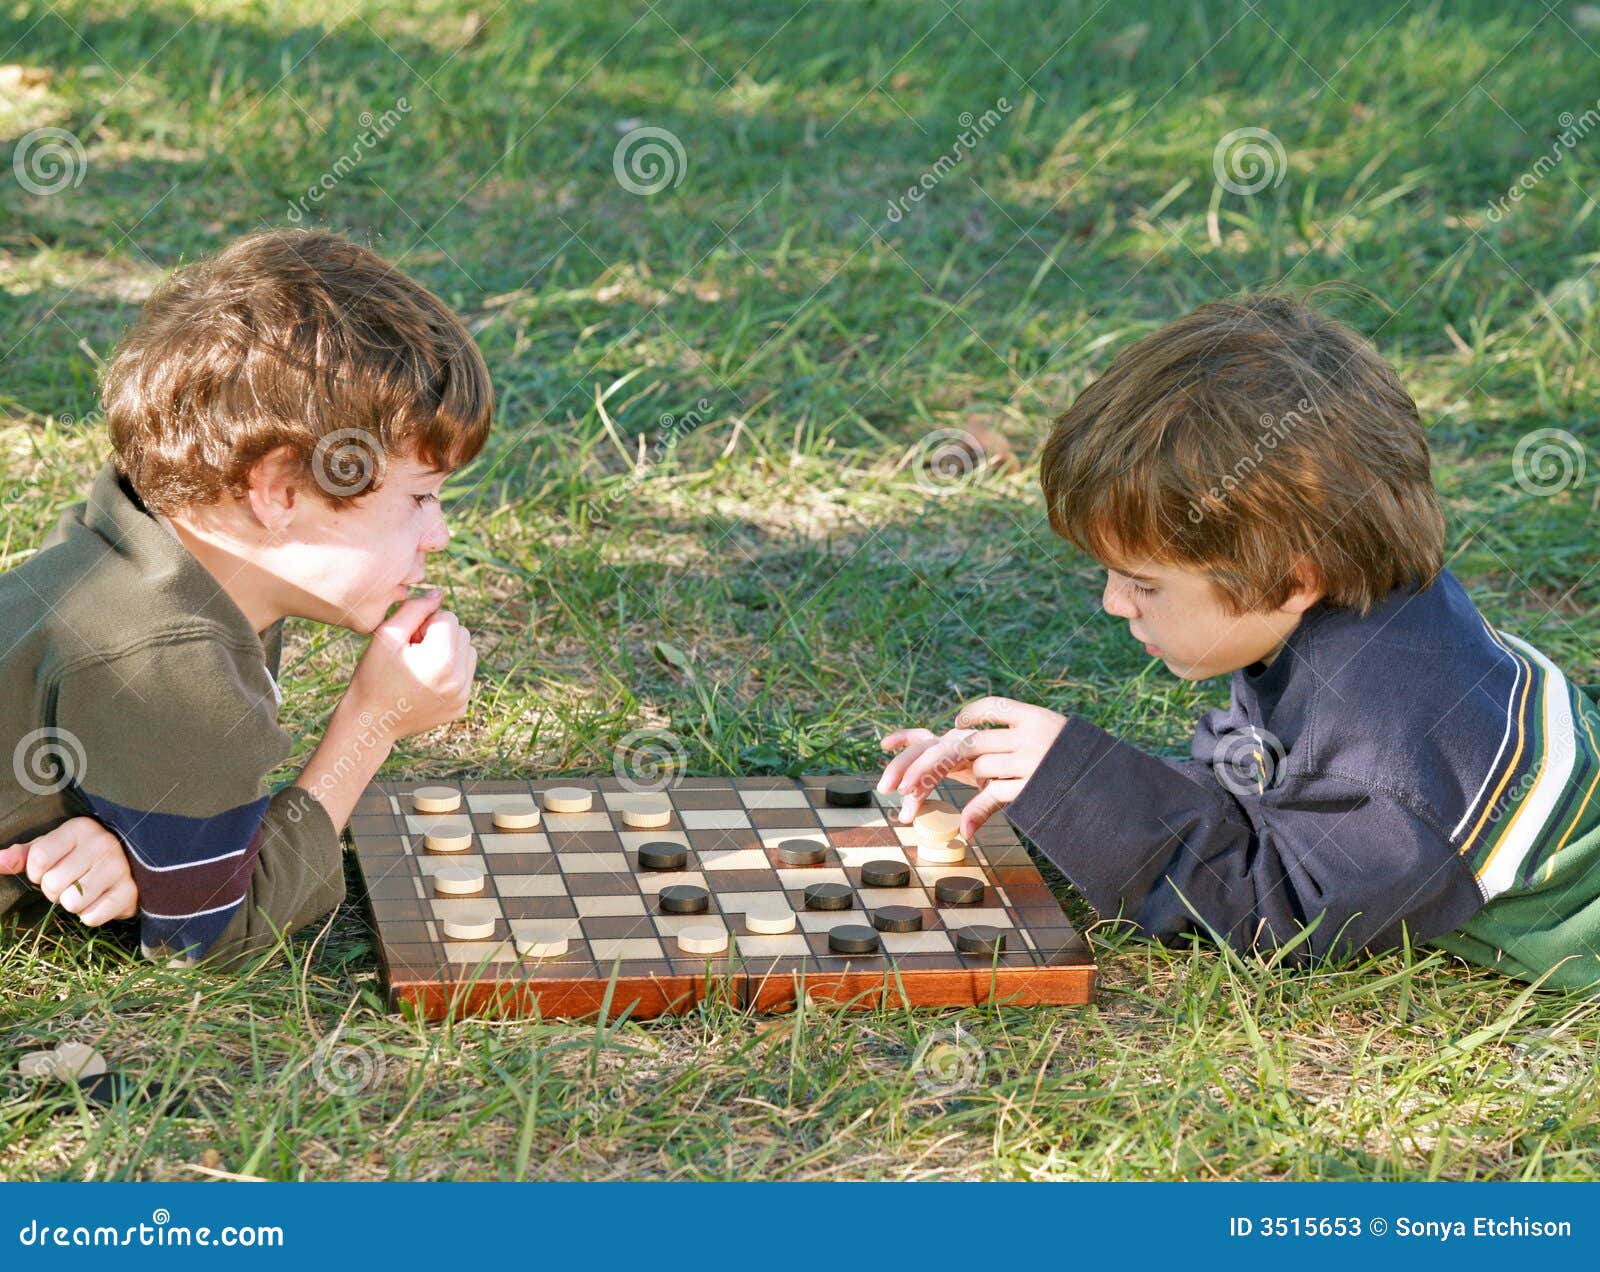 boys playing checkers